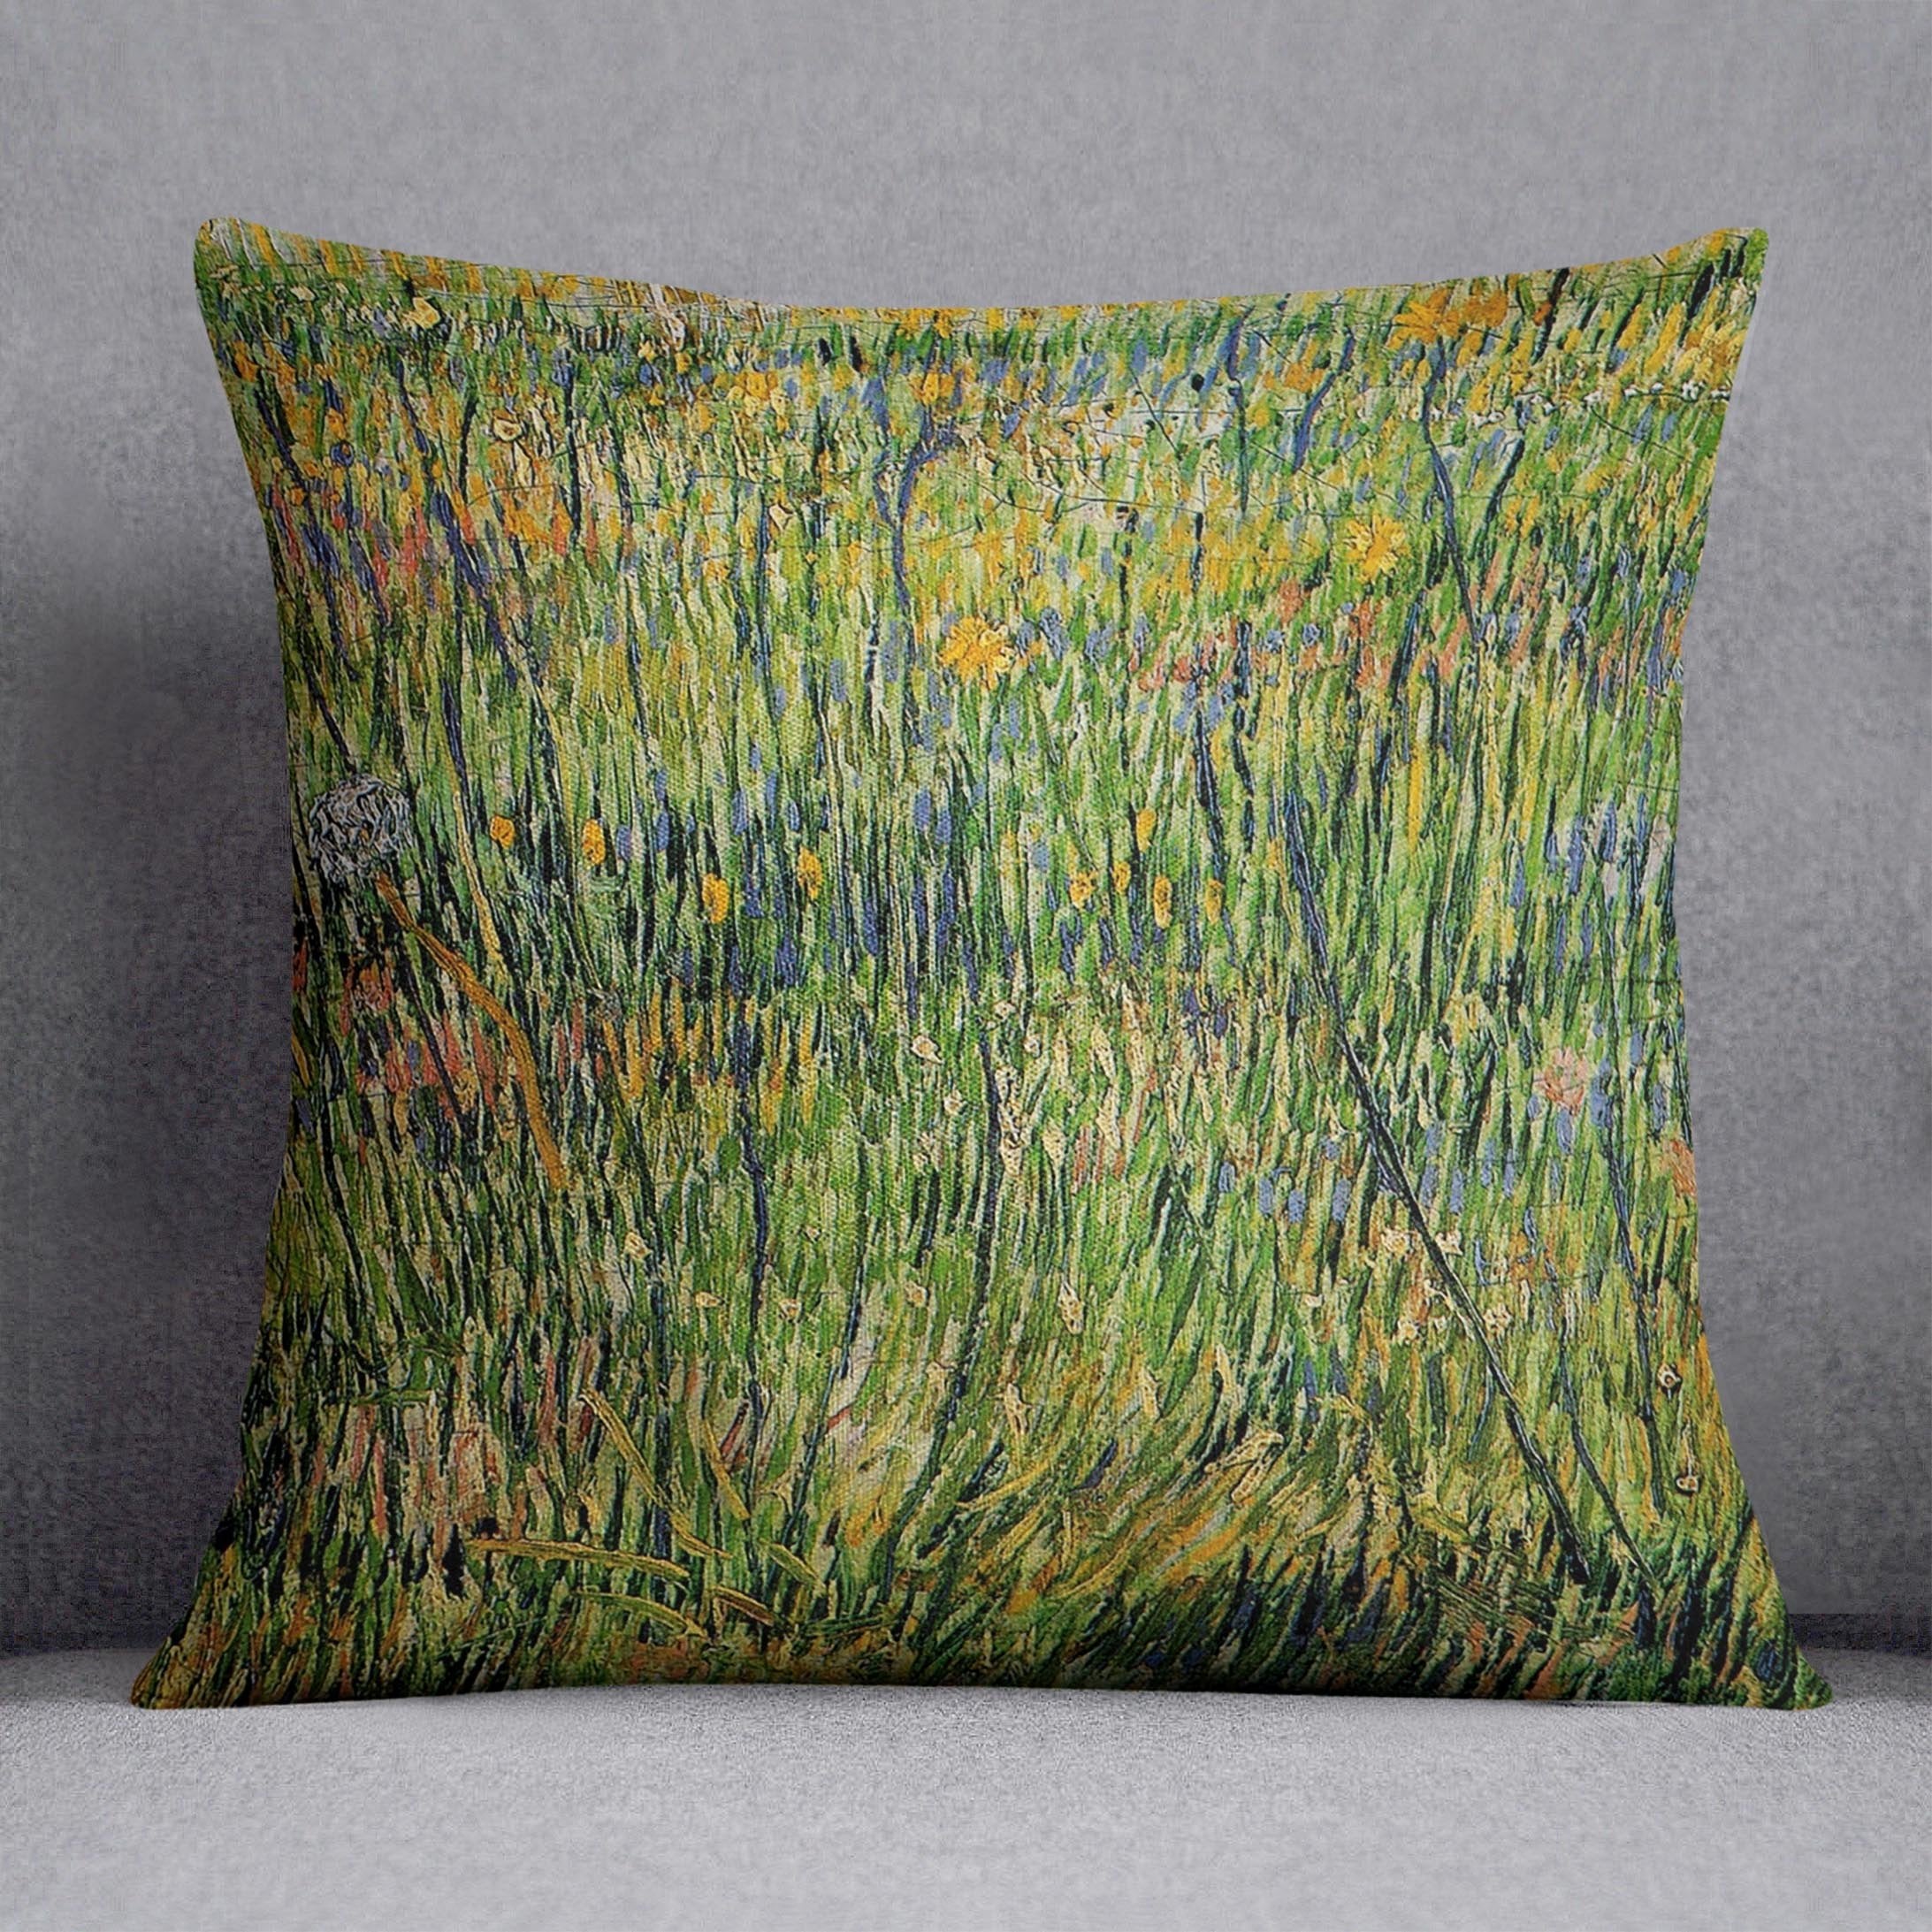 Pasture in Bloom by Van Gogh Throw Pillow